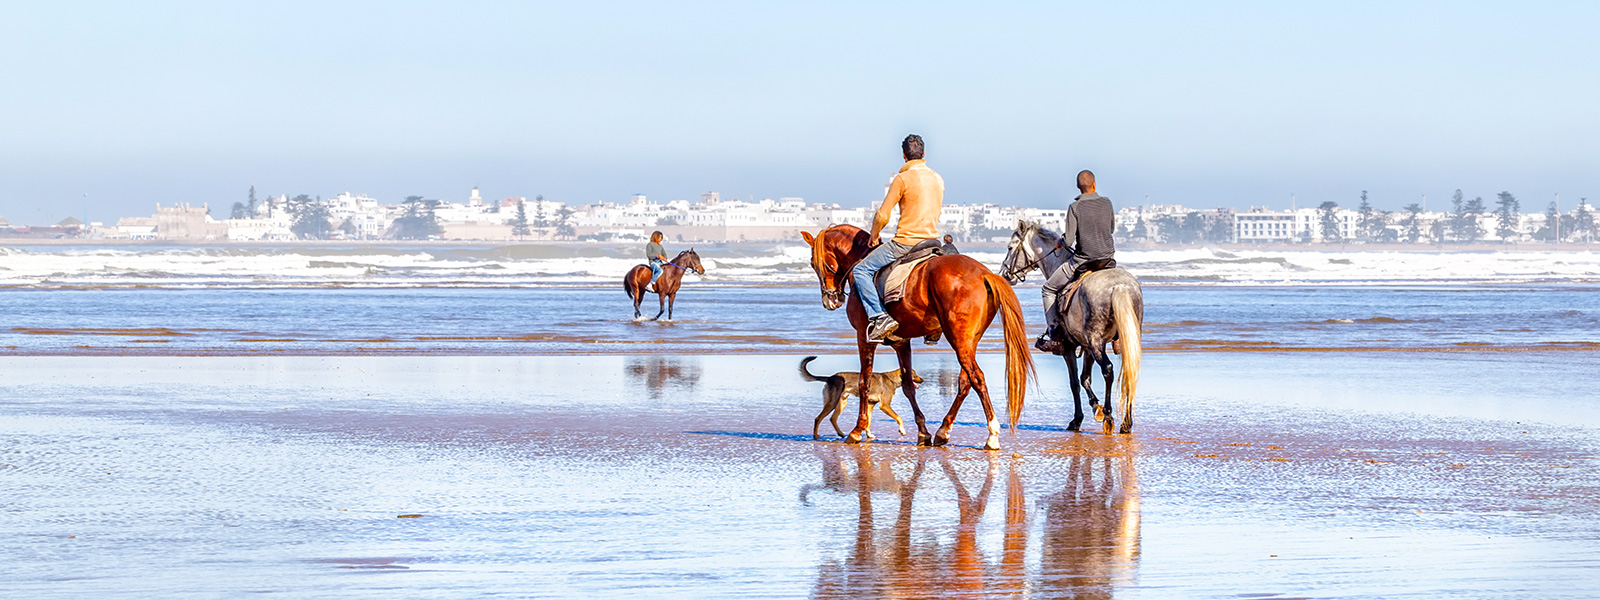 riding a horse in the beach of agadir tourism in morocco